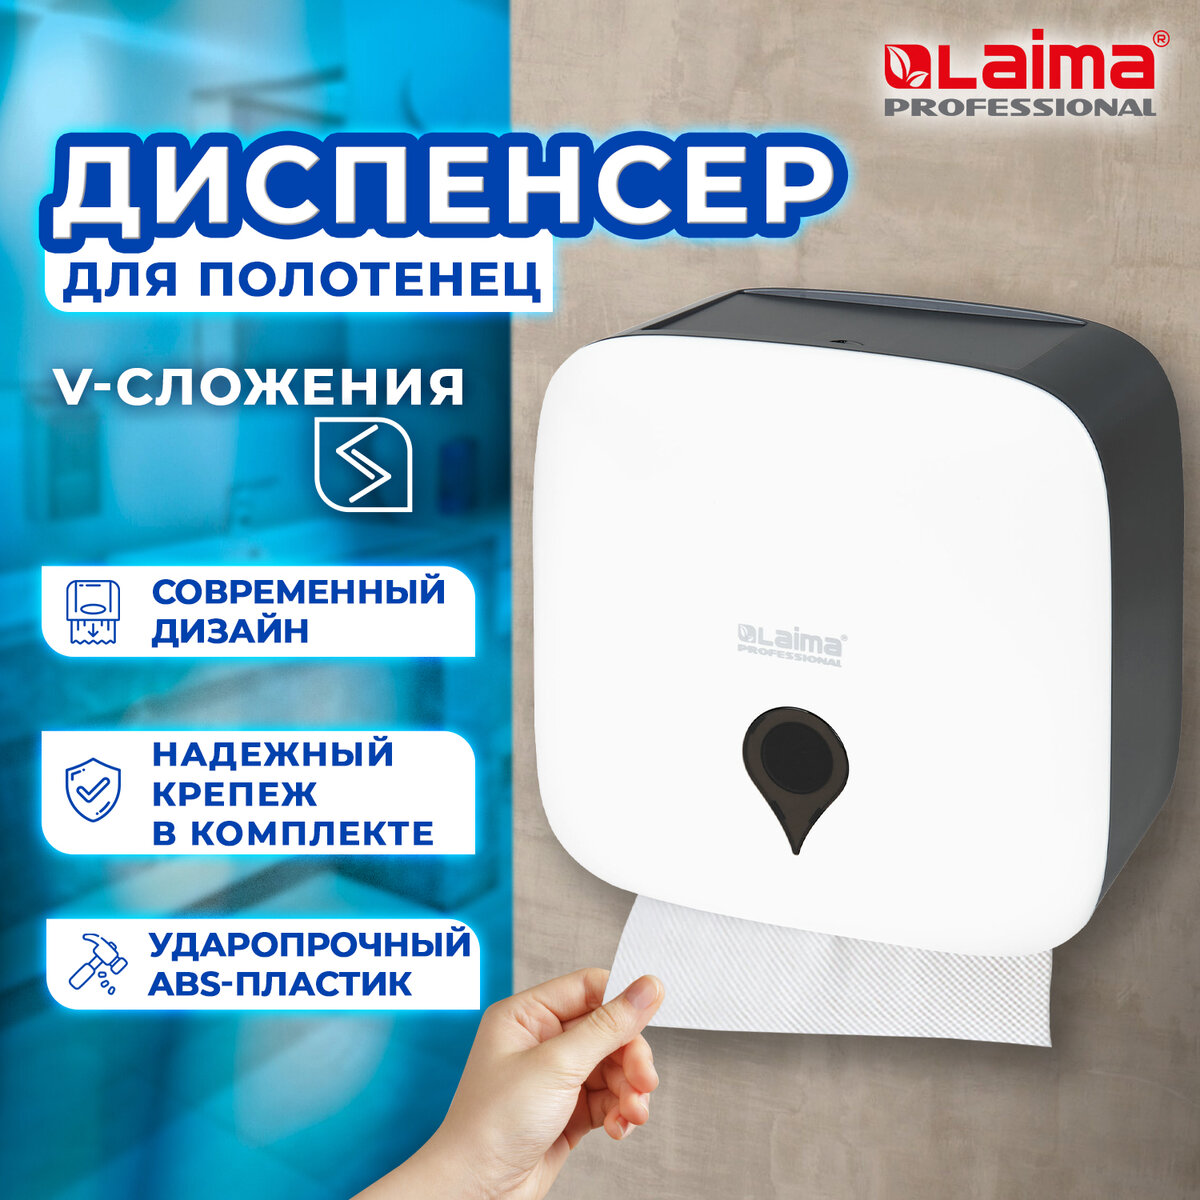 Диспенсер для полотенец ULTRA LAIMA PROFESSIONAL (Система H3) ABS-пластик, 606834